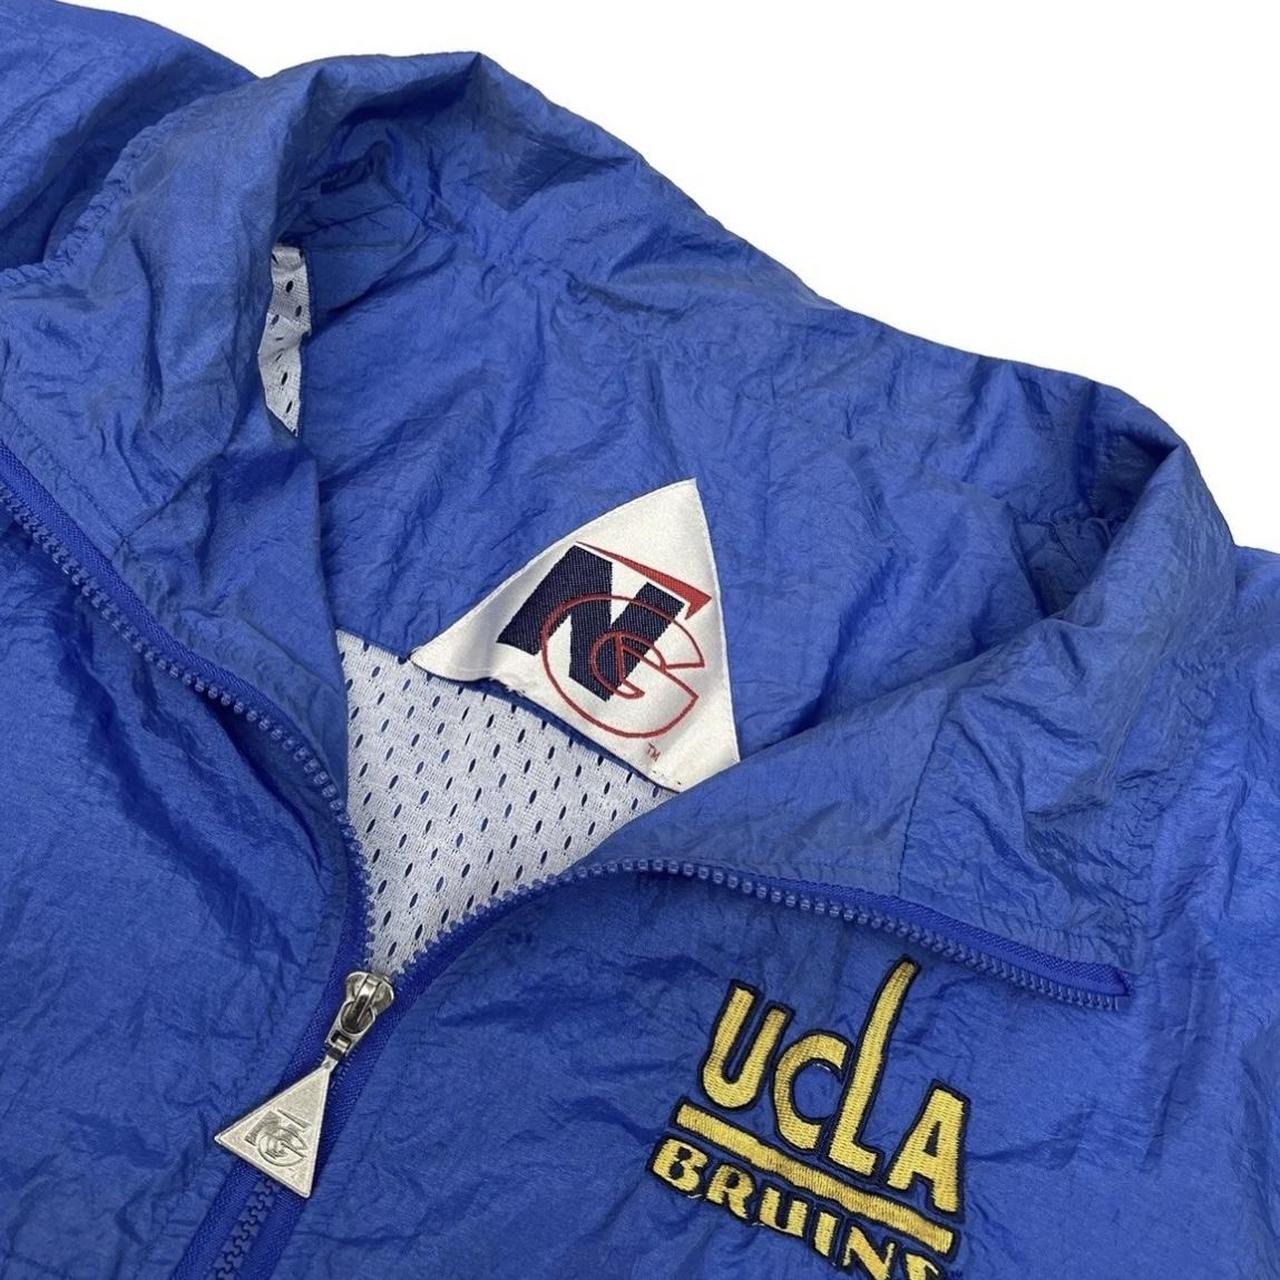 Vintage 80's-90's UCLA University Hoodie